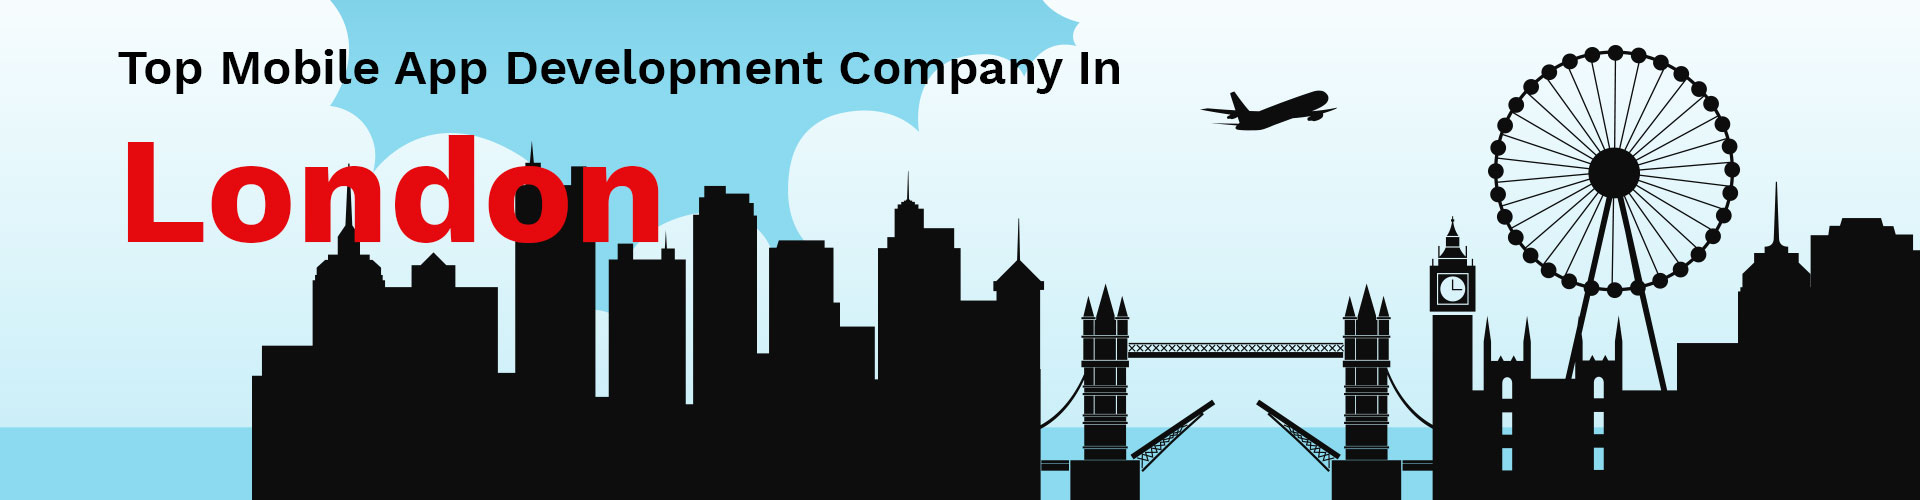 mobile app development company london